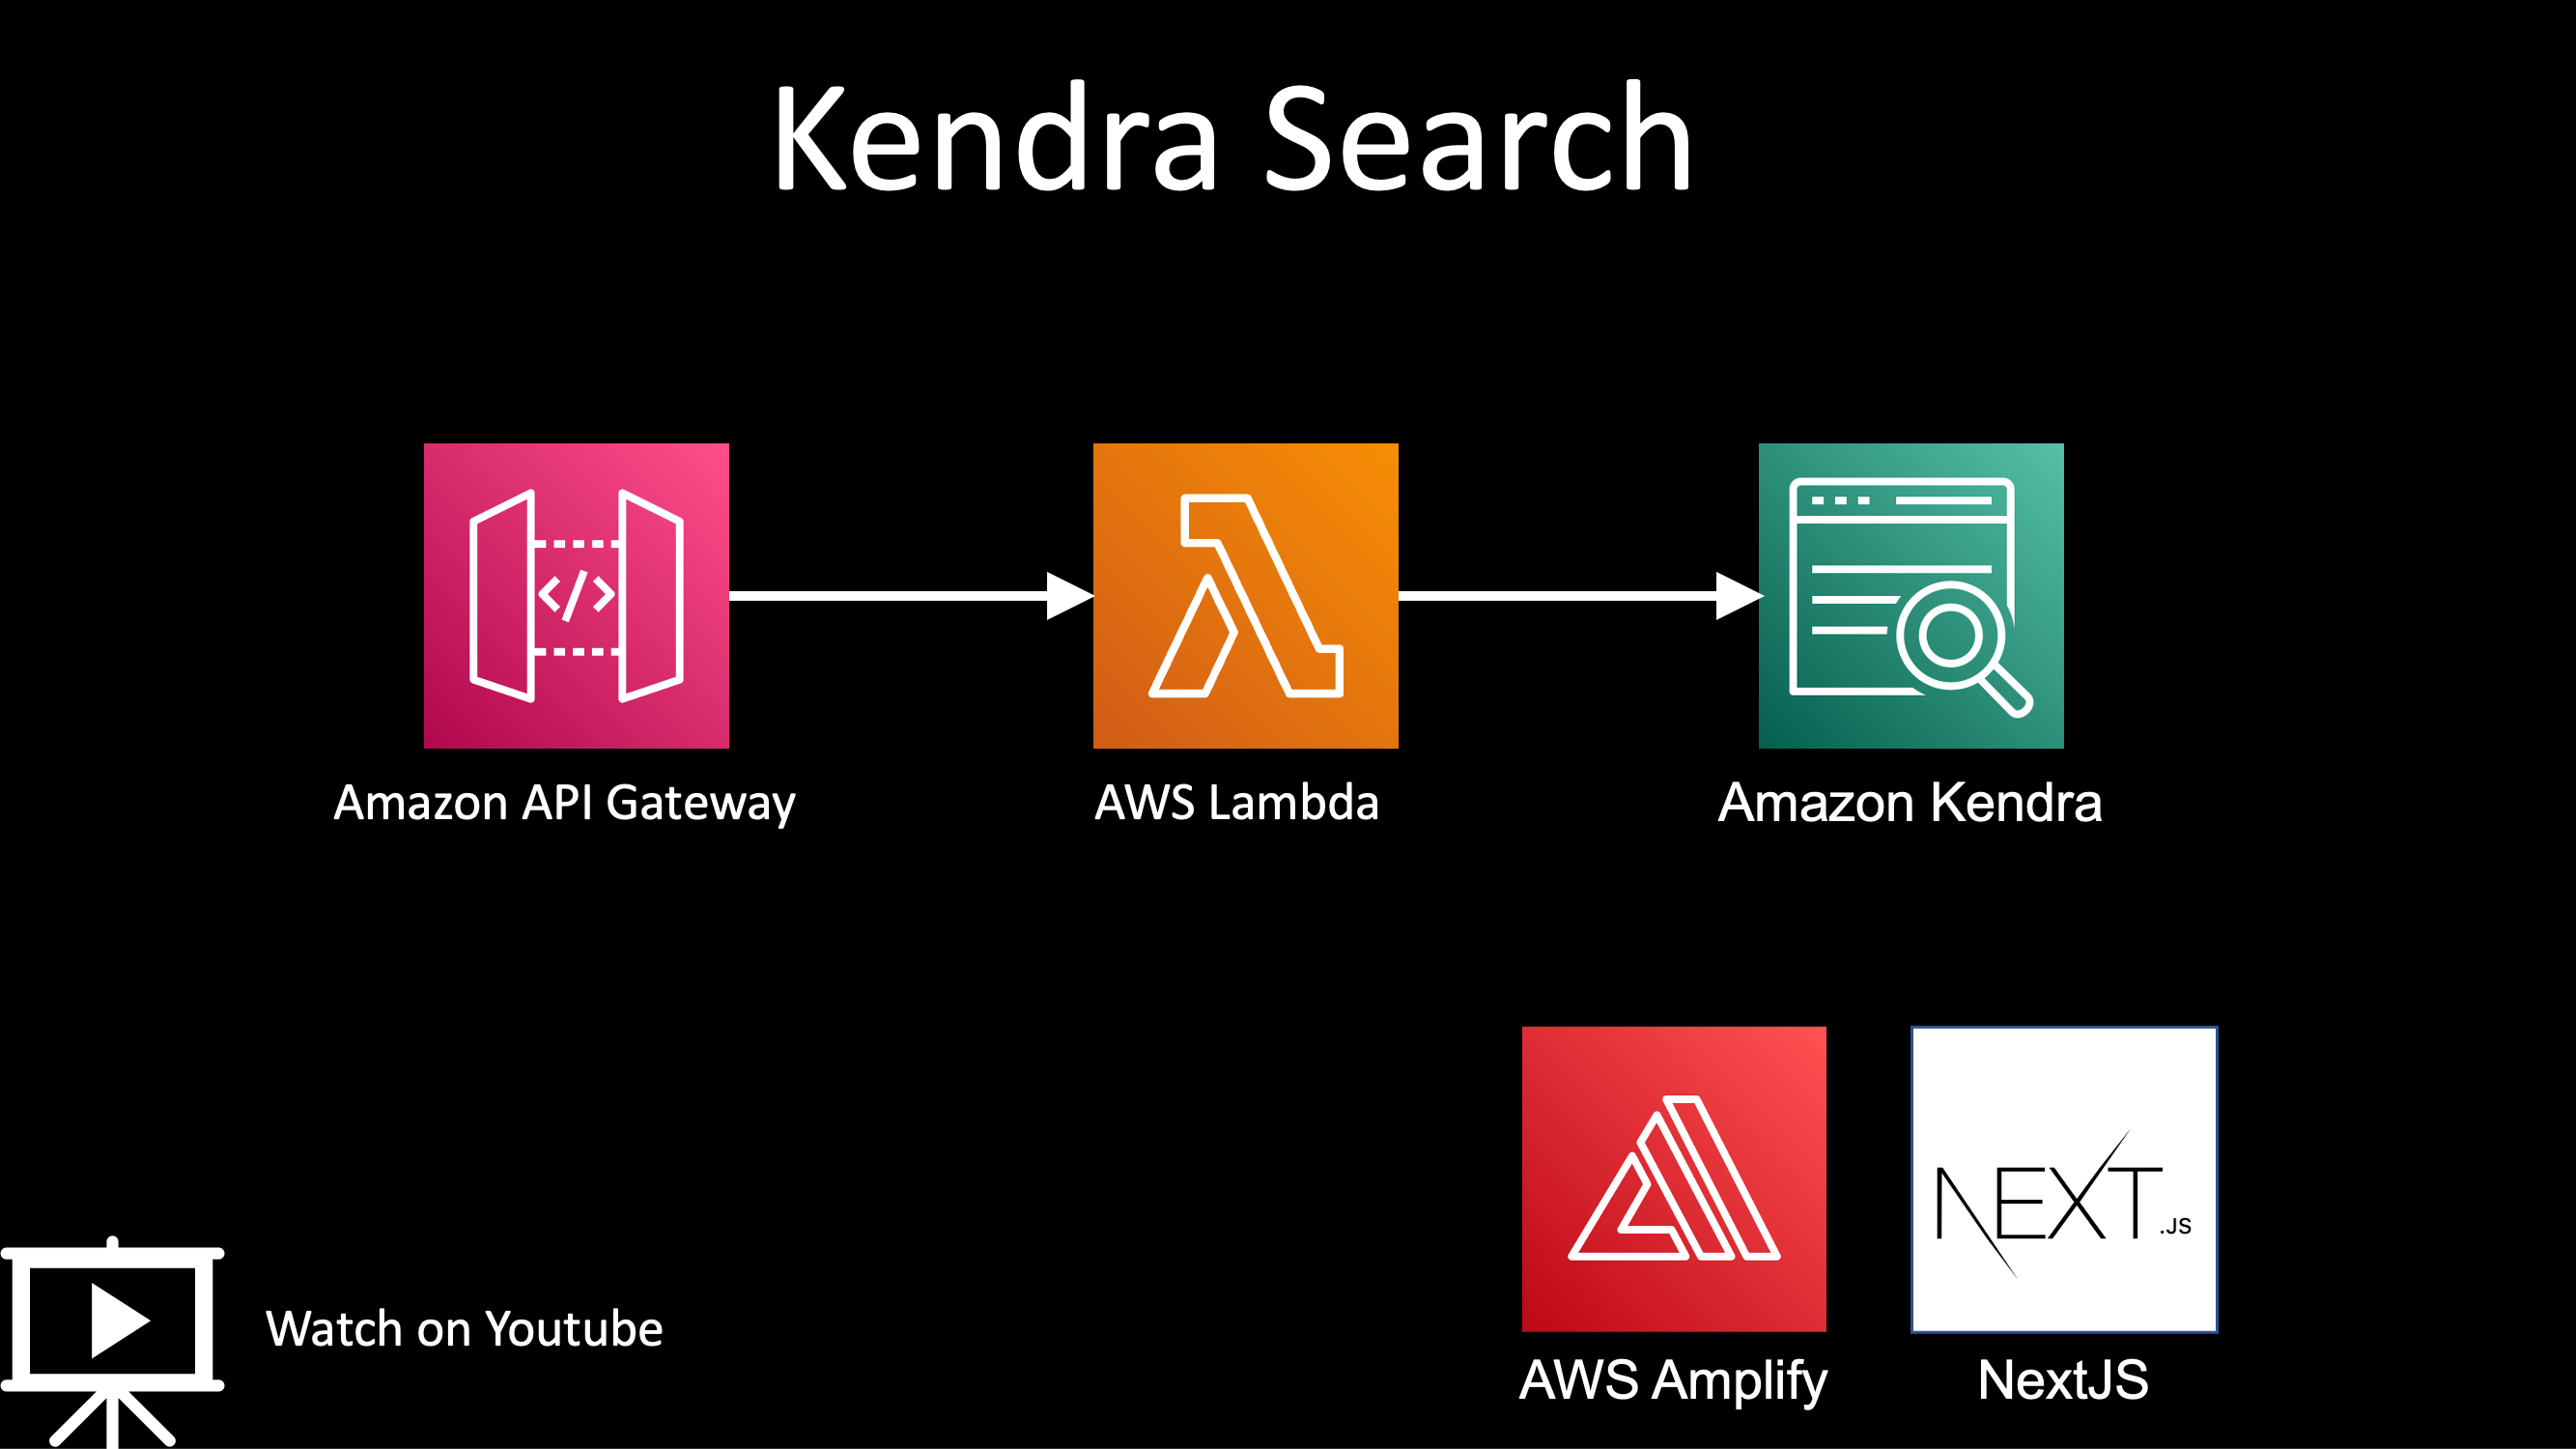 Kendra Search